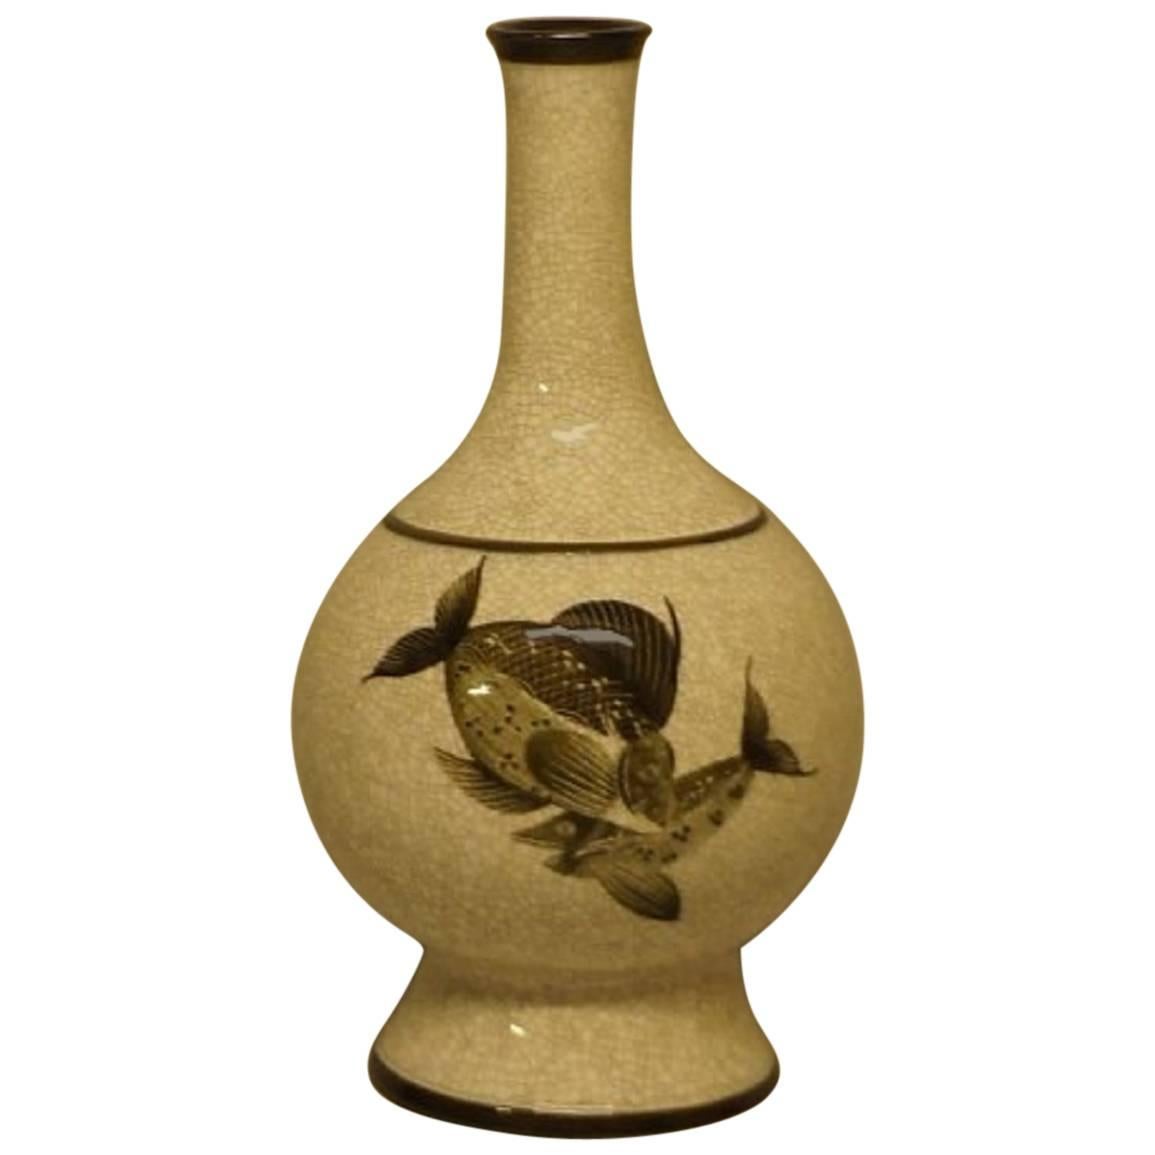 Large B&G ‘Bing & Grondahl’ Craquele Vase with Fish